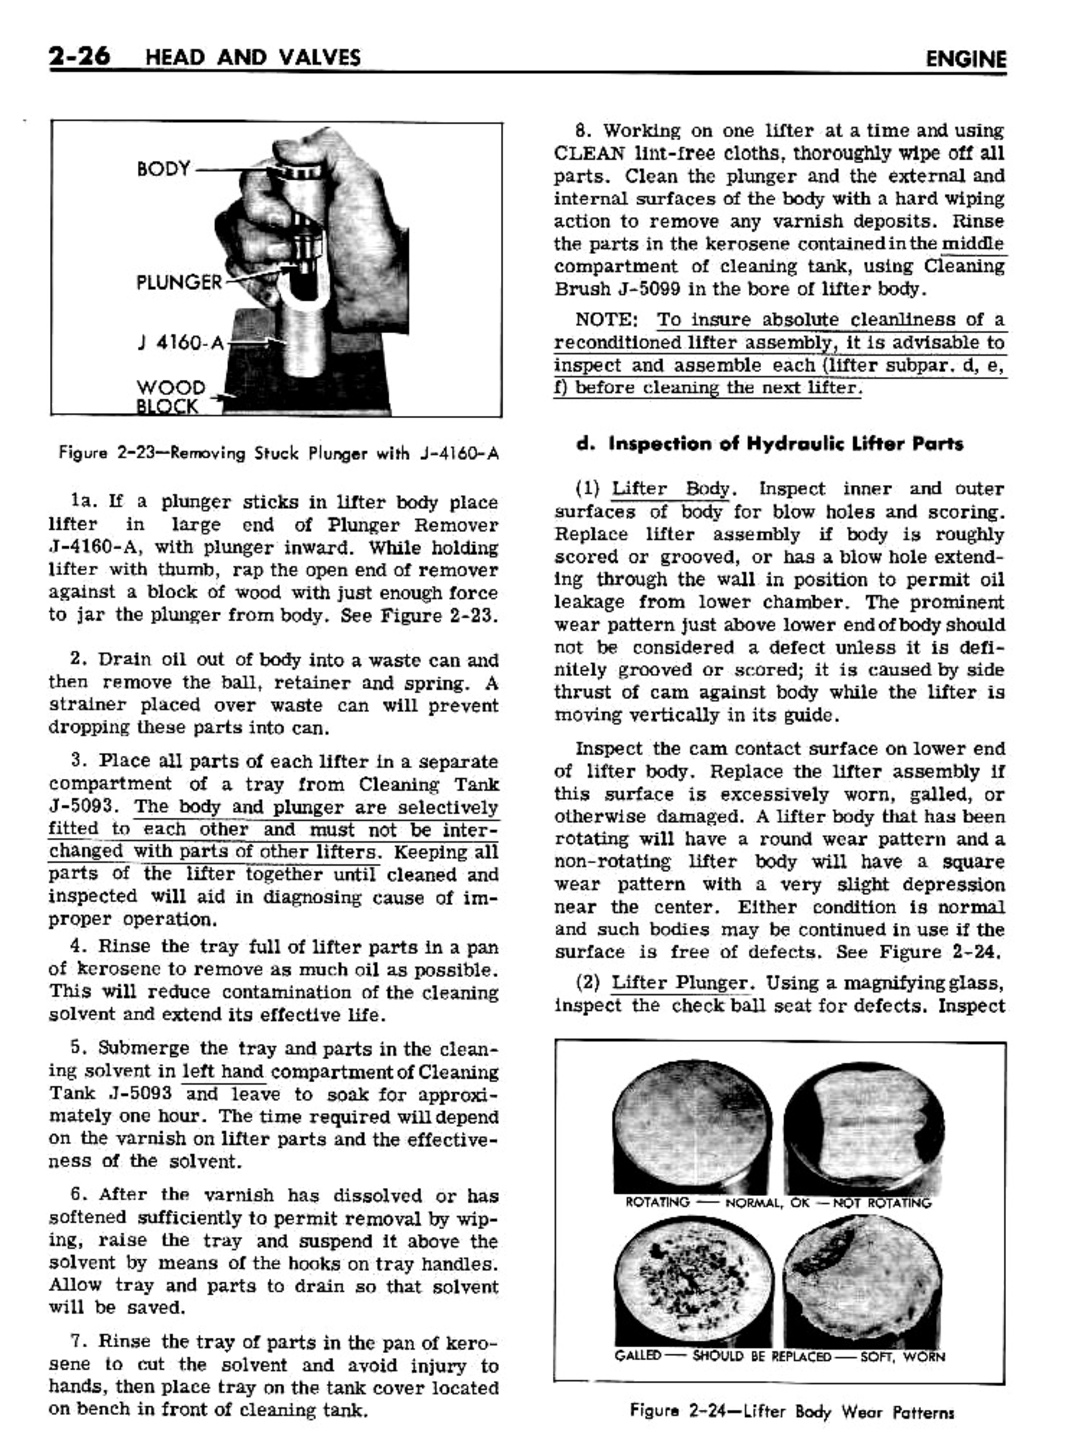 n_03 1961 Buick Shop Manual - Engine-026-026.jpg